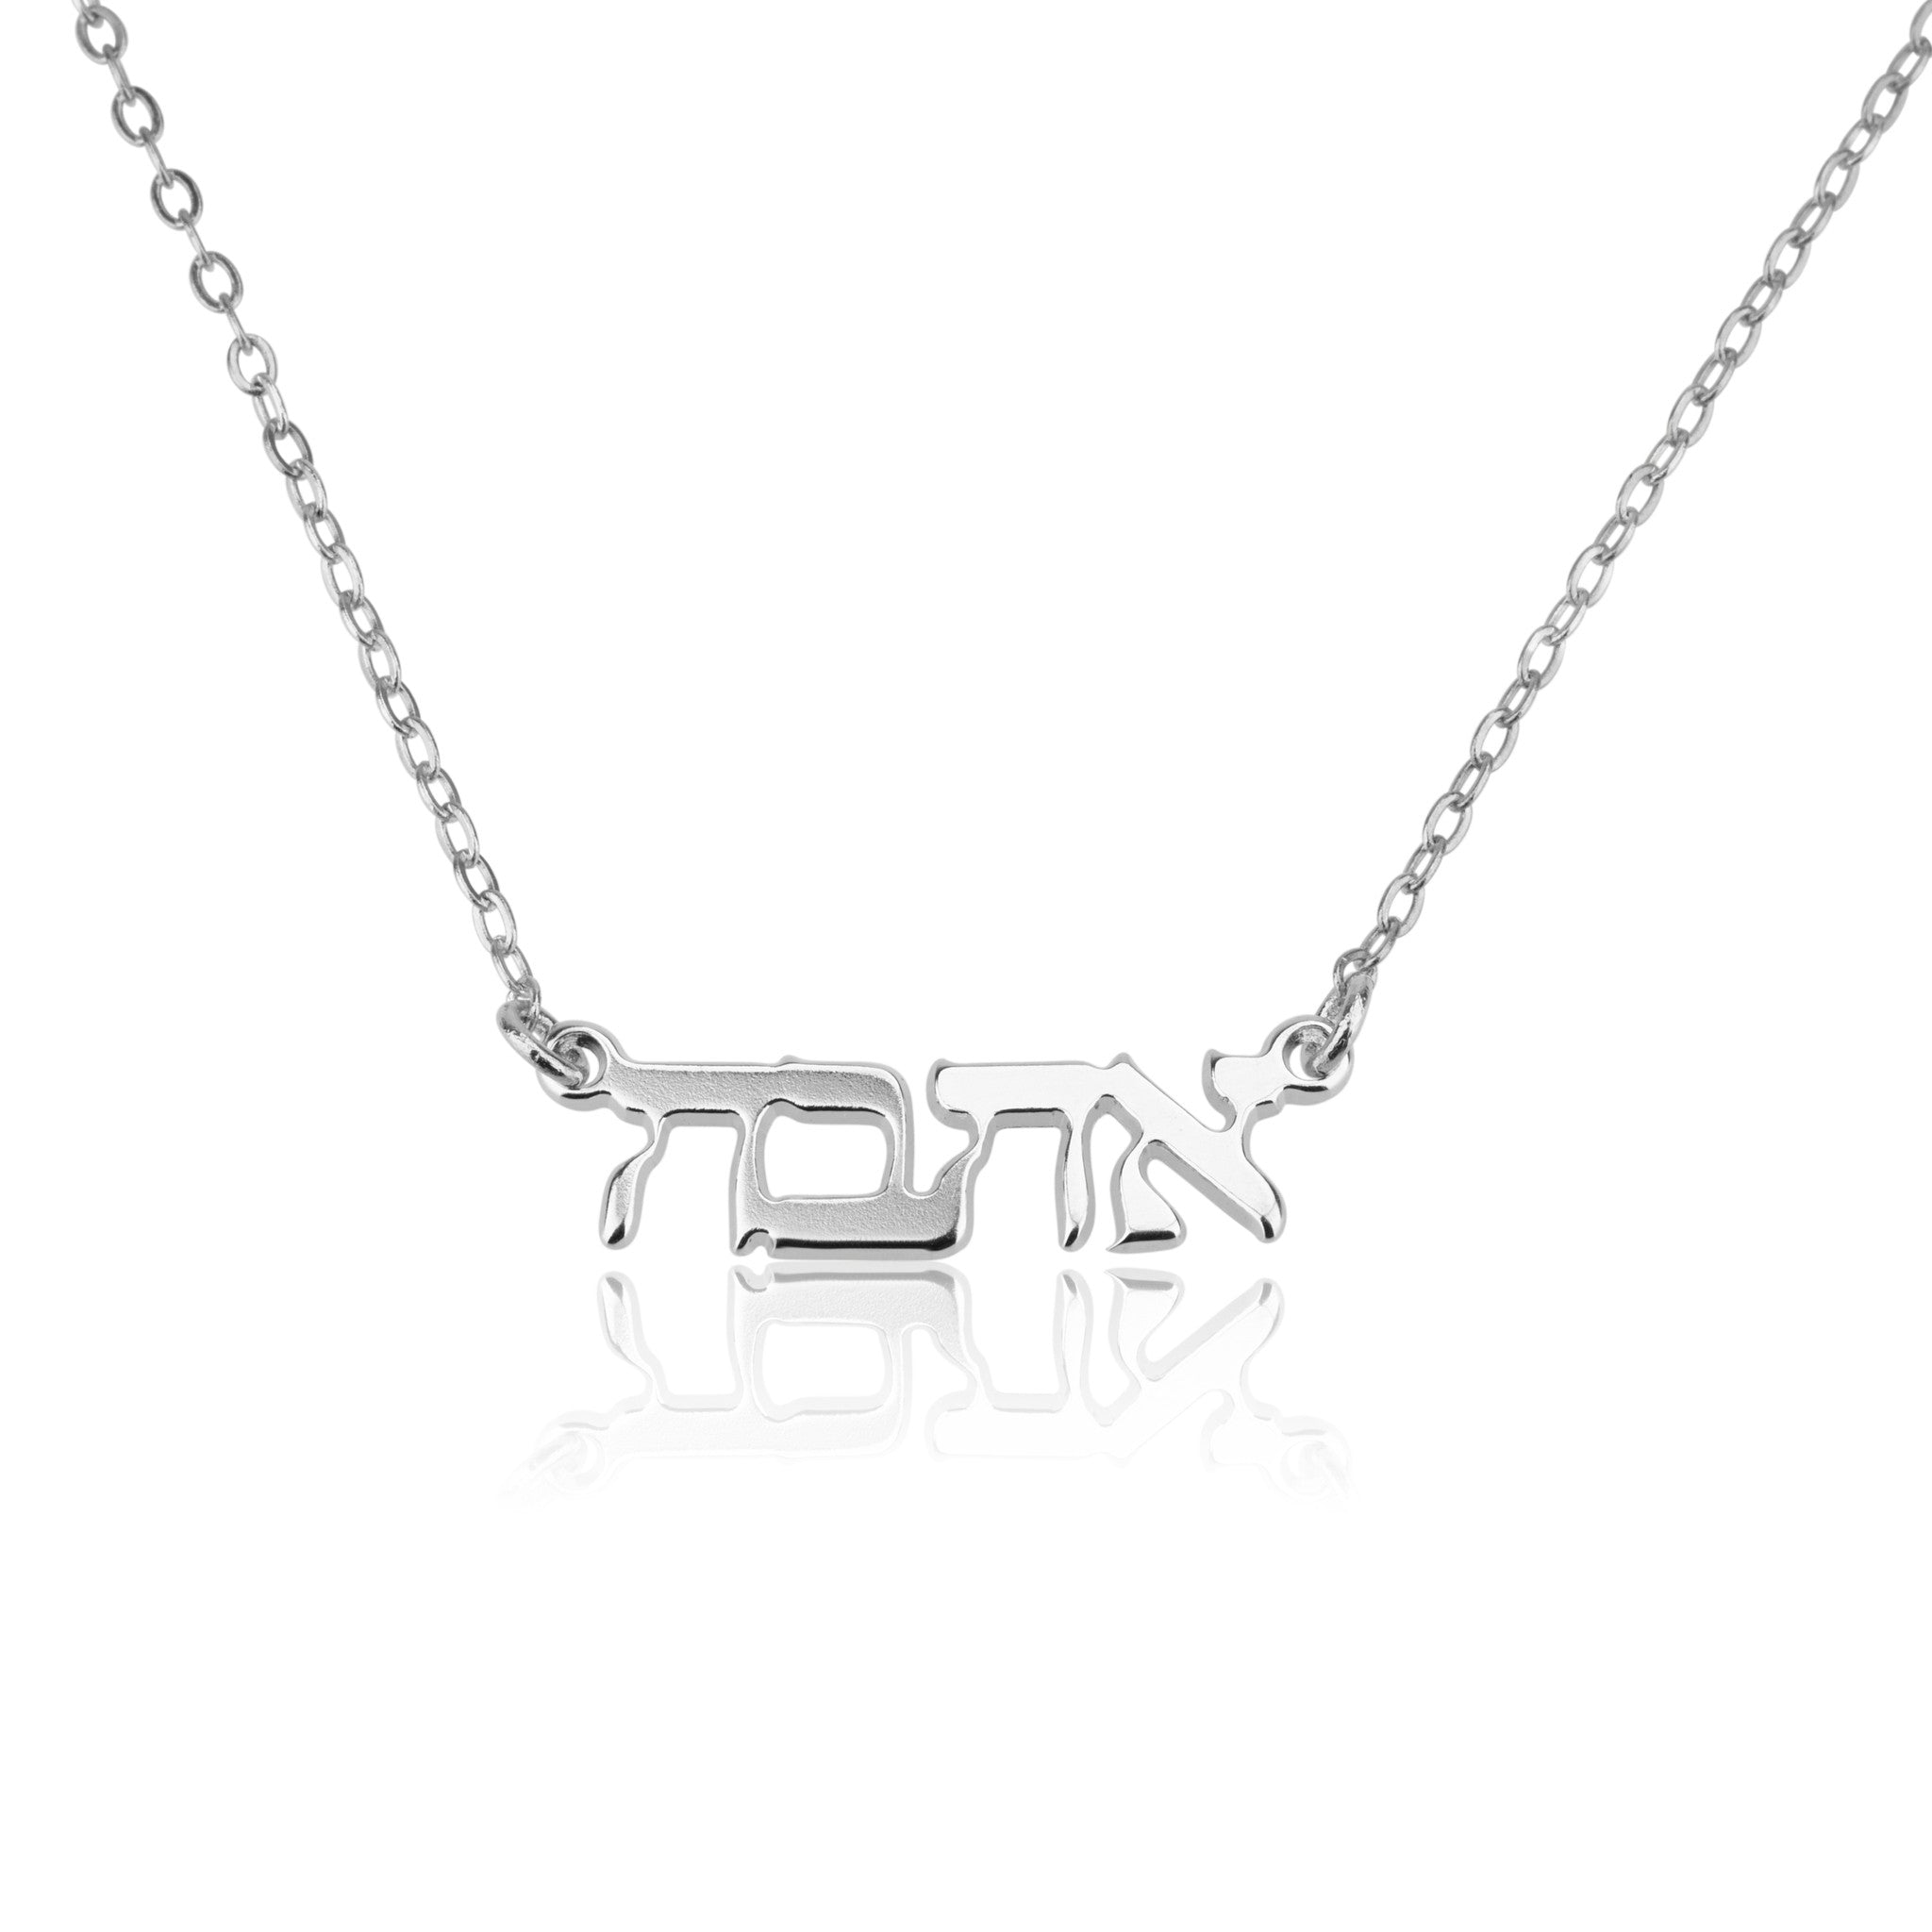 Necklaces - "Love" Pendant & Helen Chain Necklace